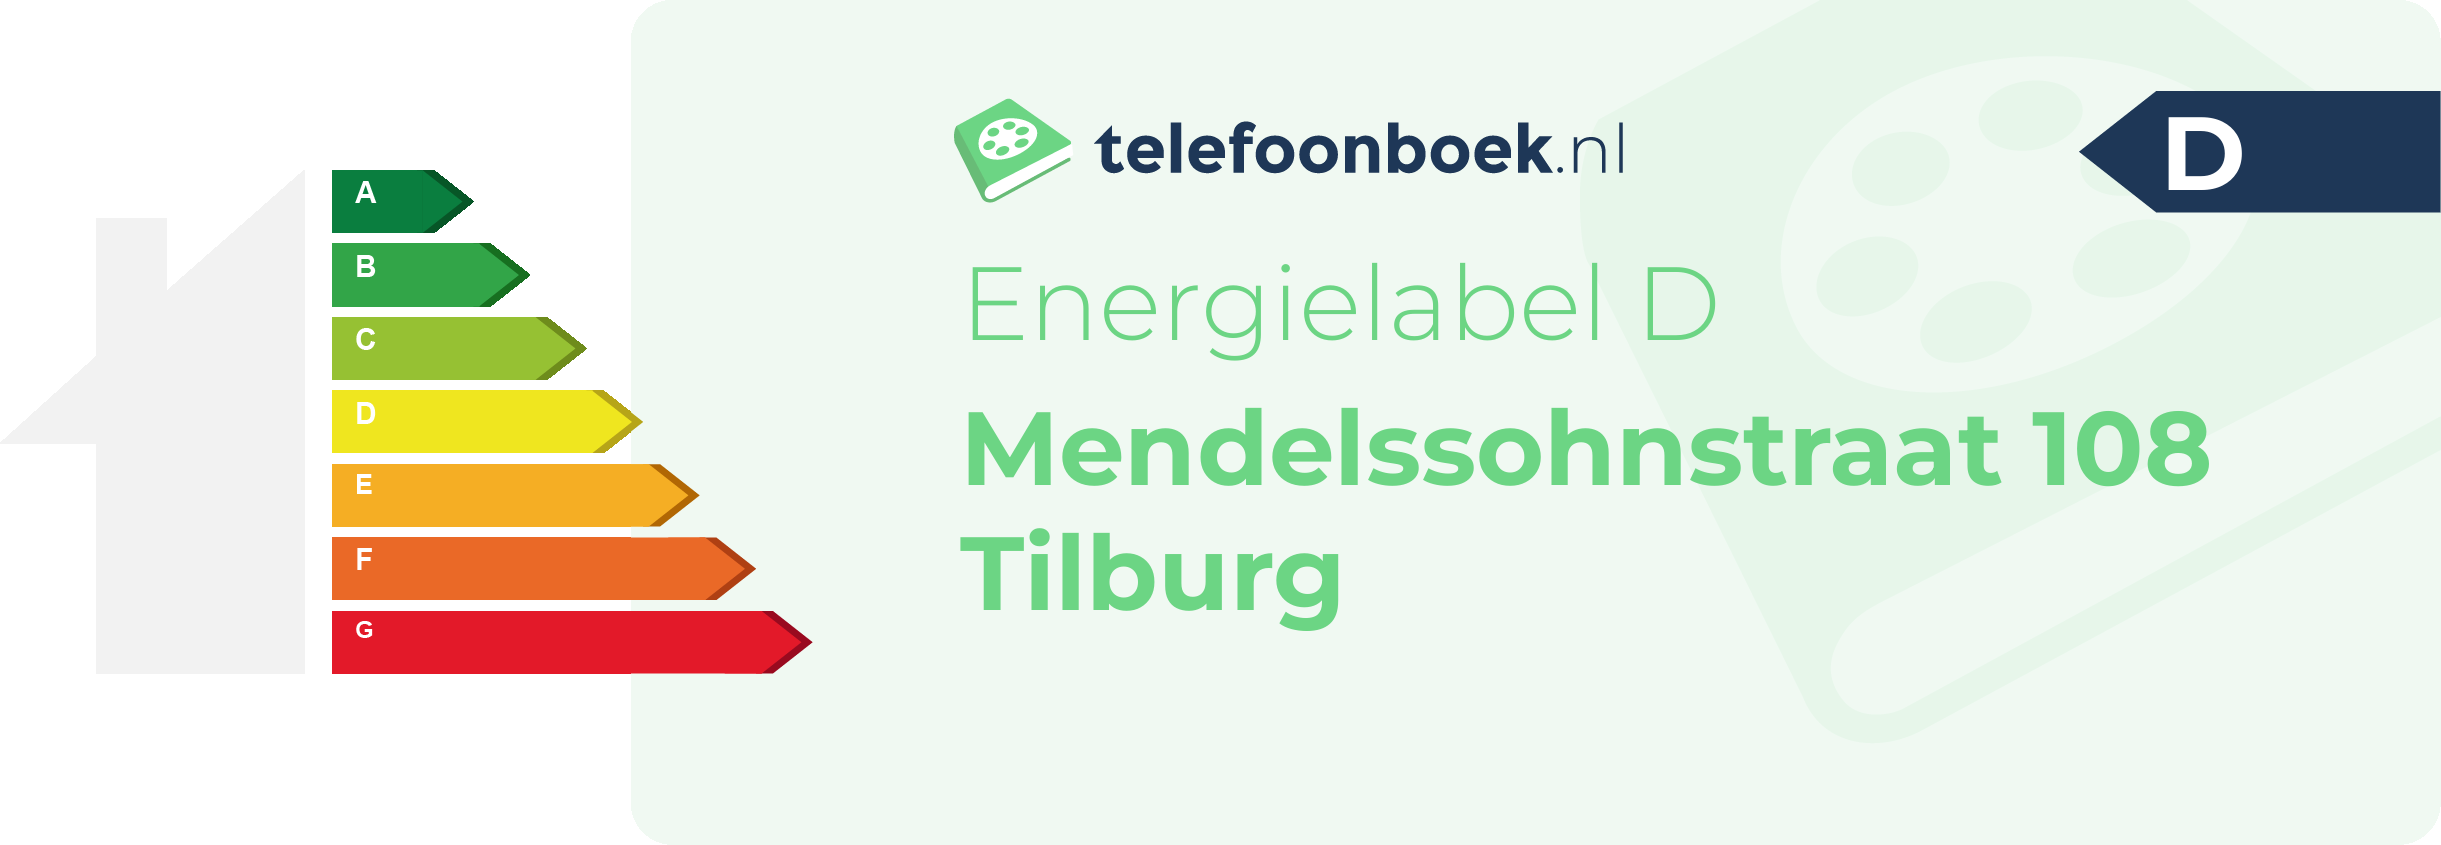 Energielabel Mendelssohnstraat 108 Tilburg